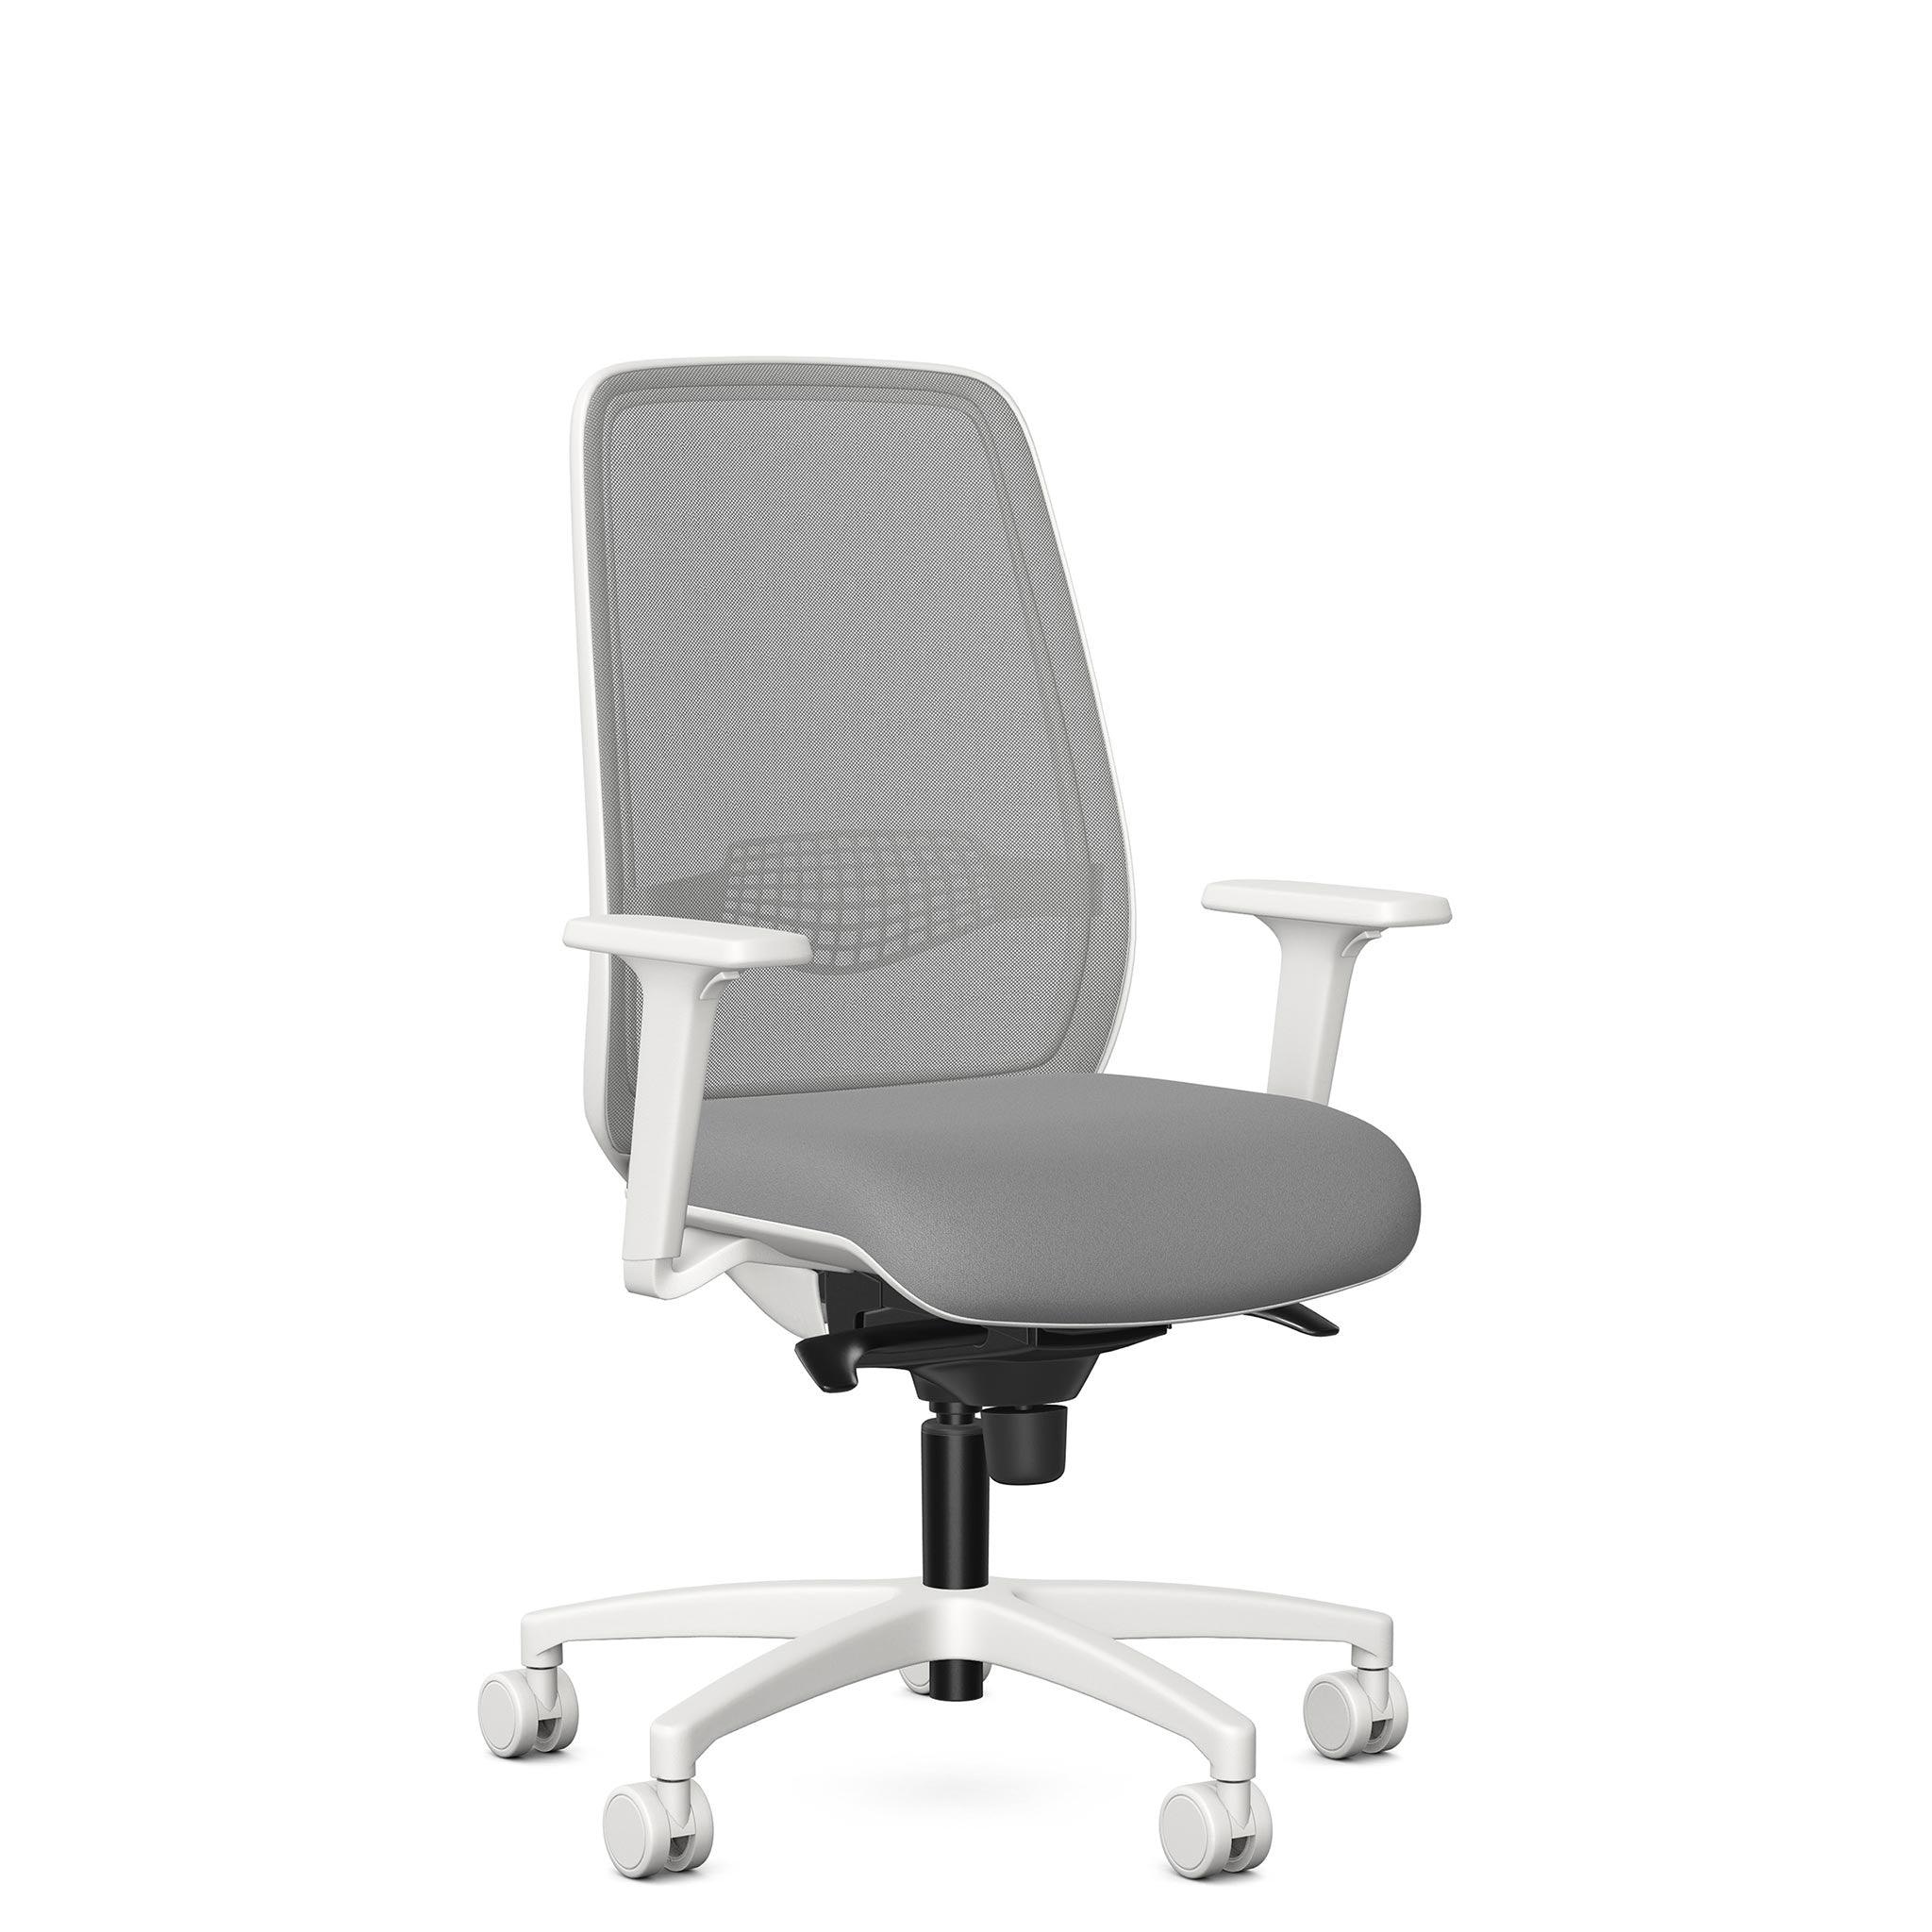 Neemo Ergonomic Office Chair - iMovR